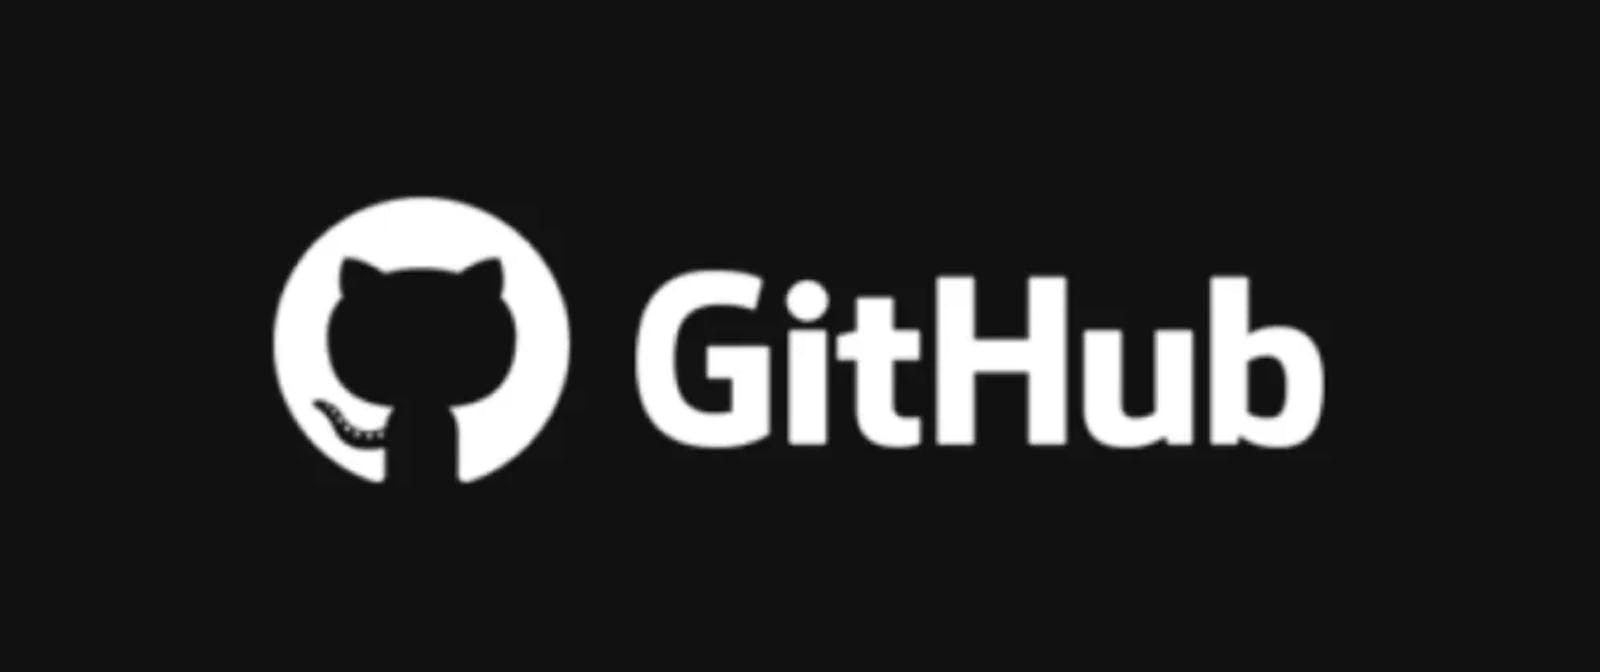 How to host a website on GitHub with custom domain